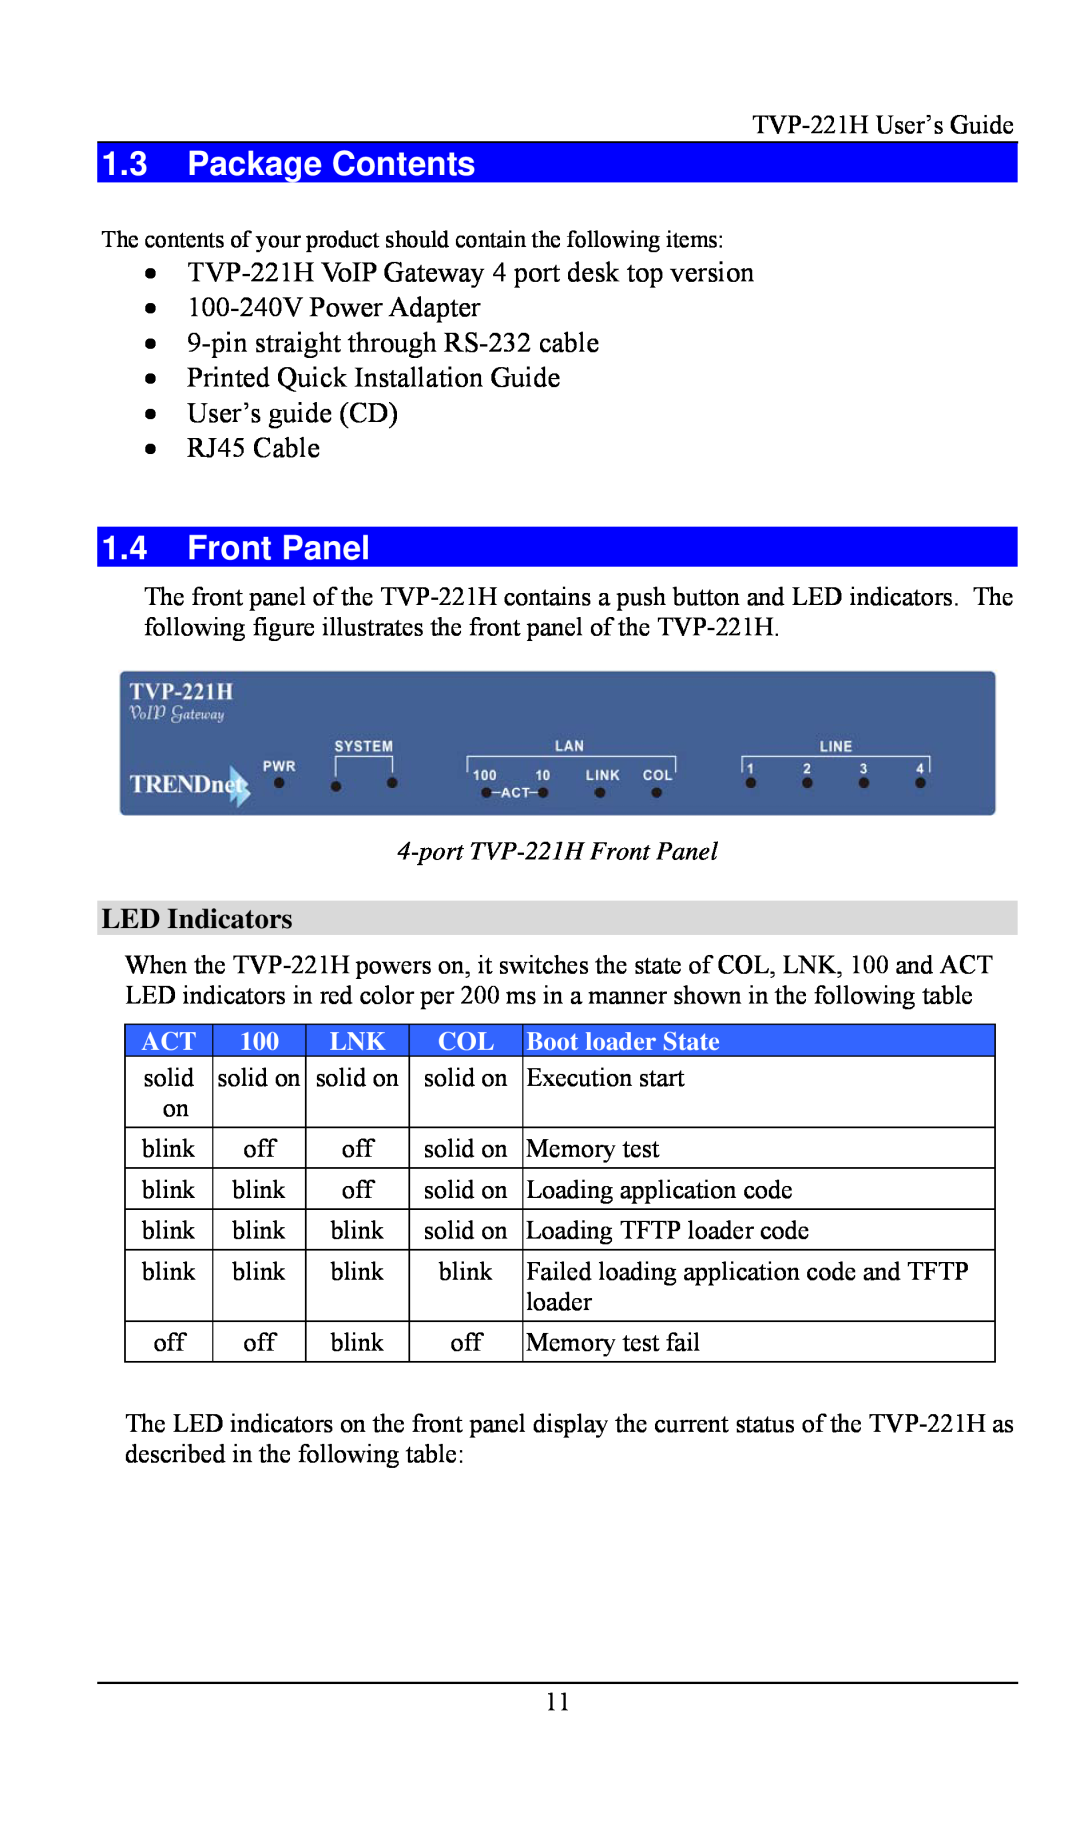 TRENDnet VoIP Gateway, TVP- 221H manual Package Contents, LED Indicators, port TVP-221H Front Panel, Boot loader State 